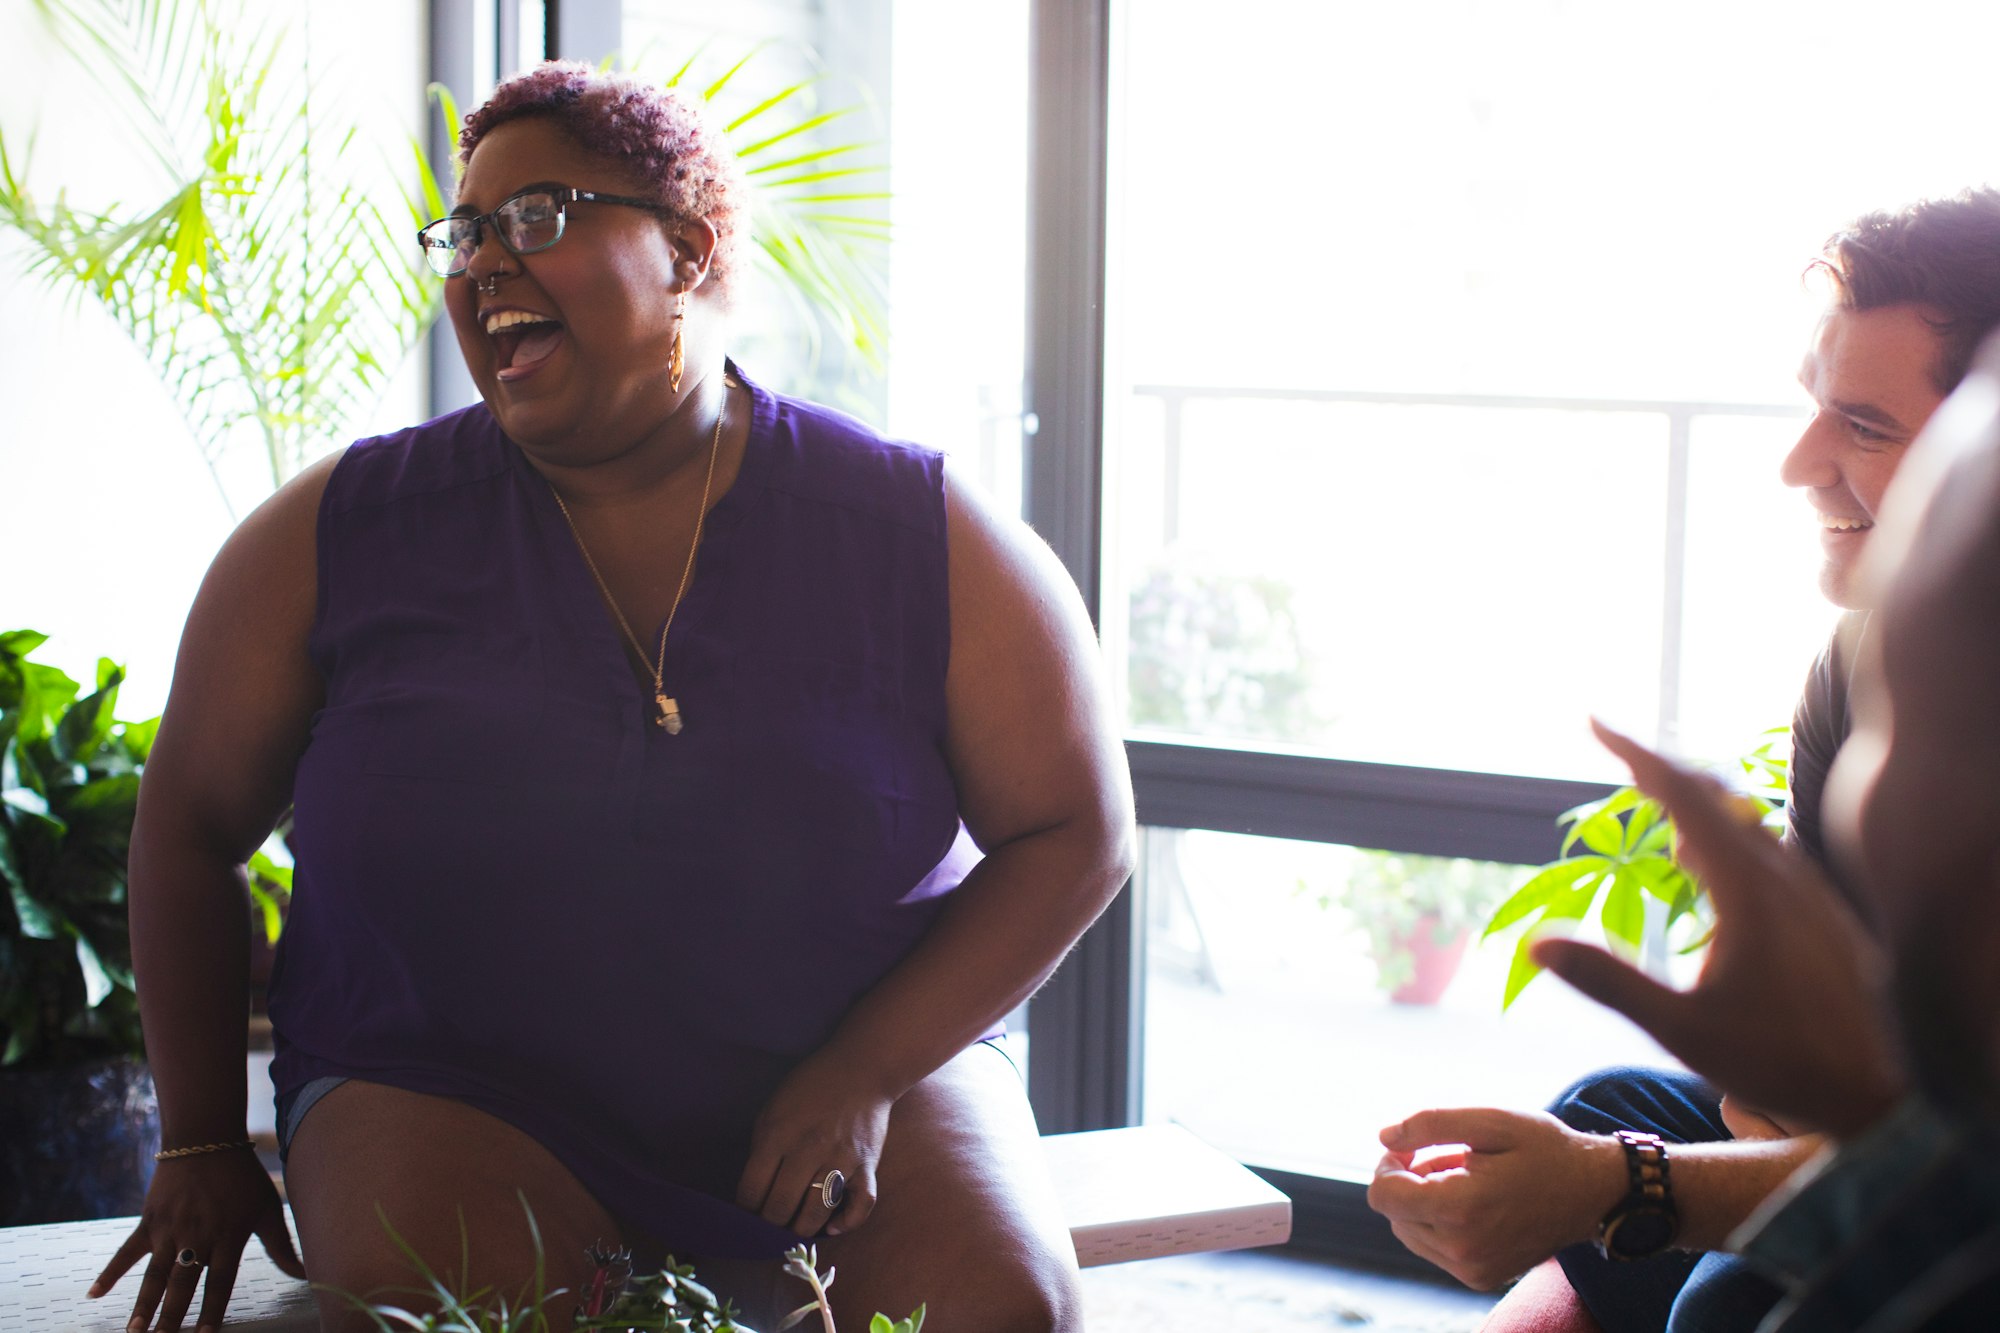 Black plus-size woman laughing